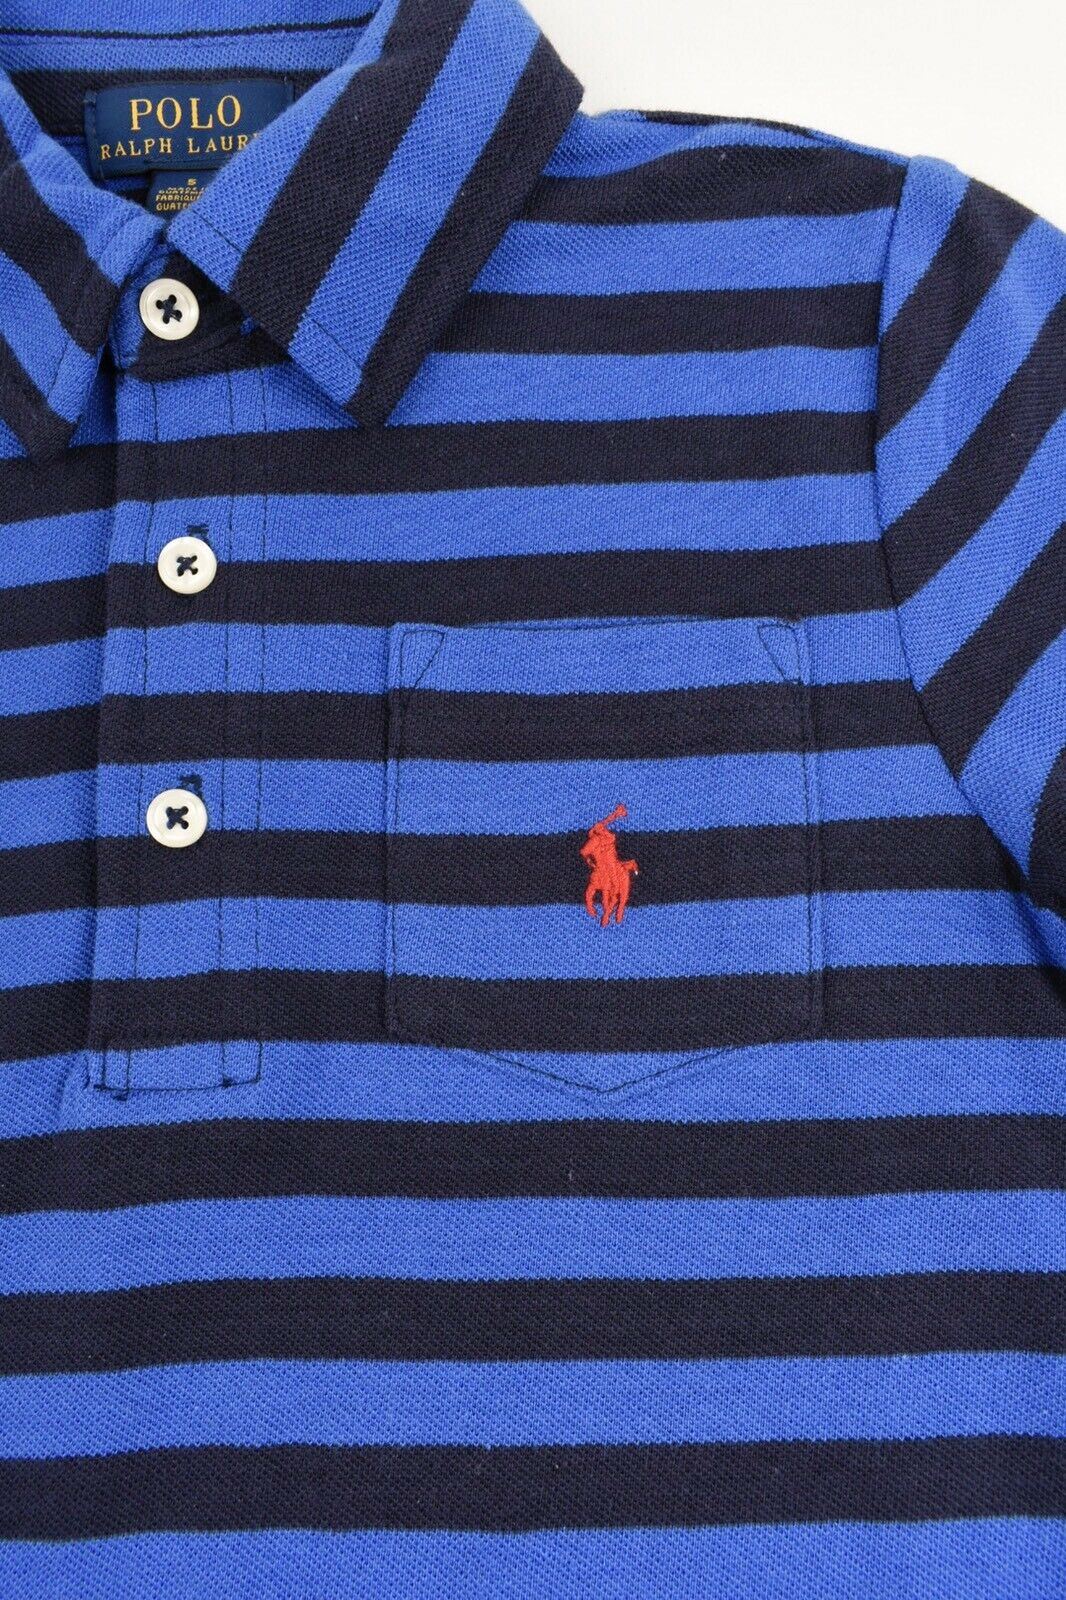 POLO RALPH LAUREN Boys' Kids' Blue Striped Polo Shirt, size 4 years